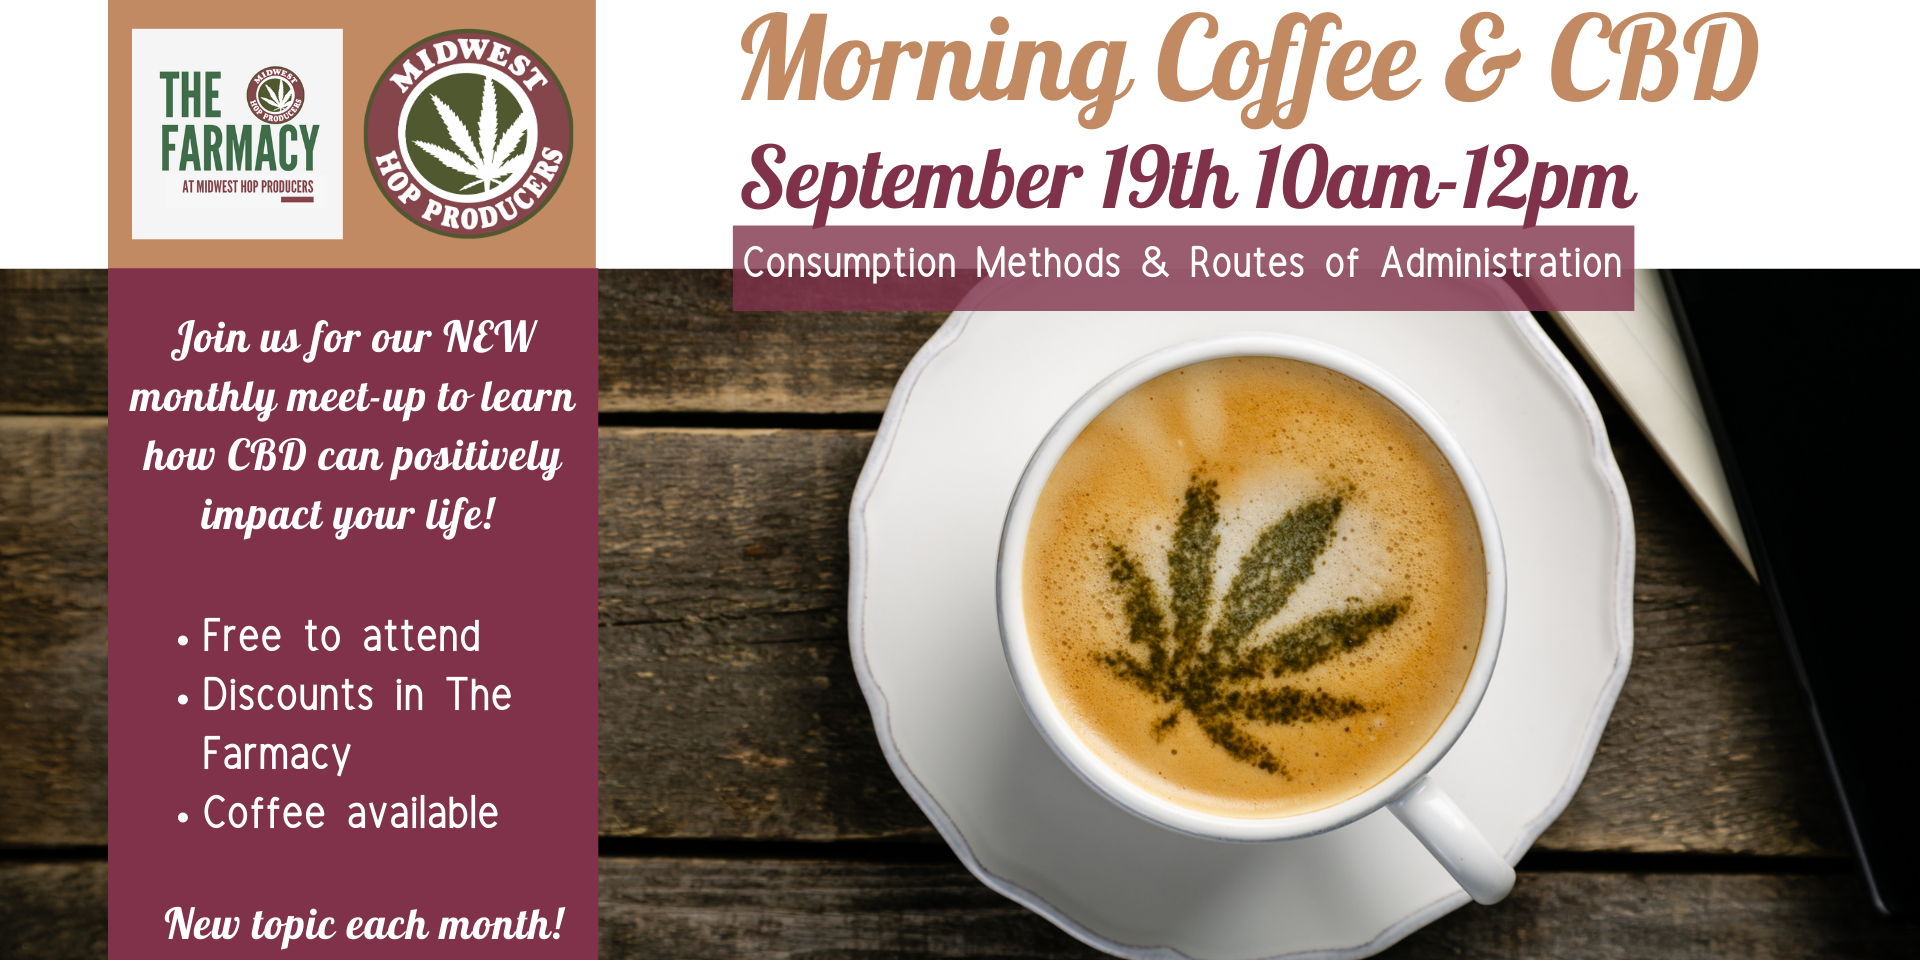 Morning Coffee & CBD promotional image